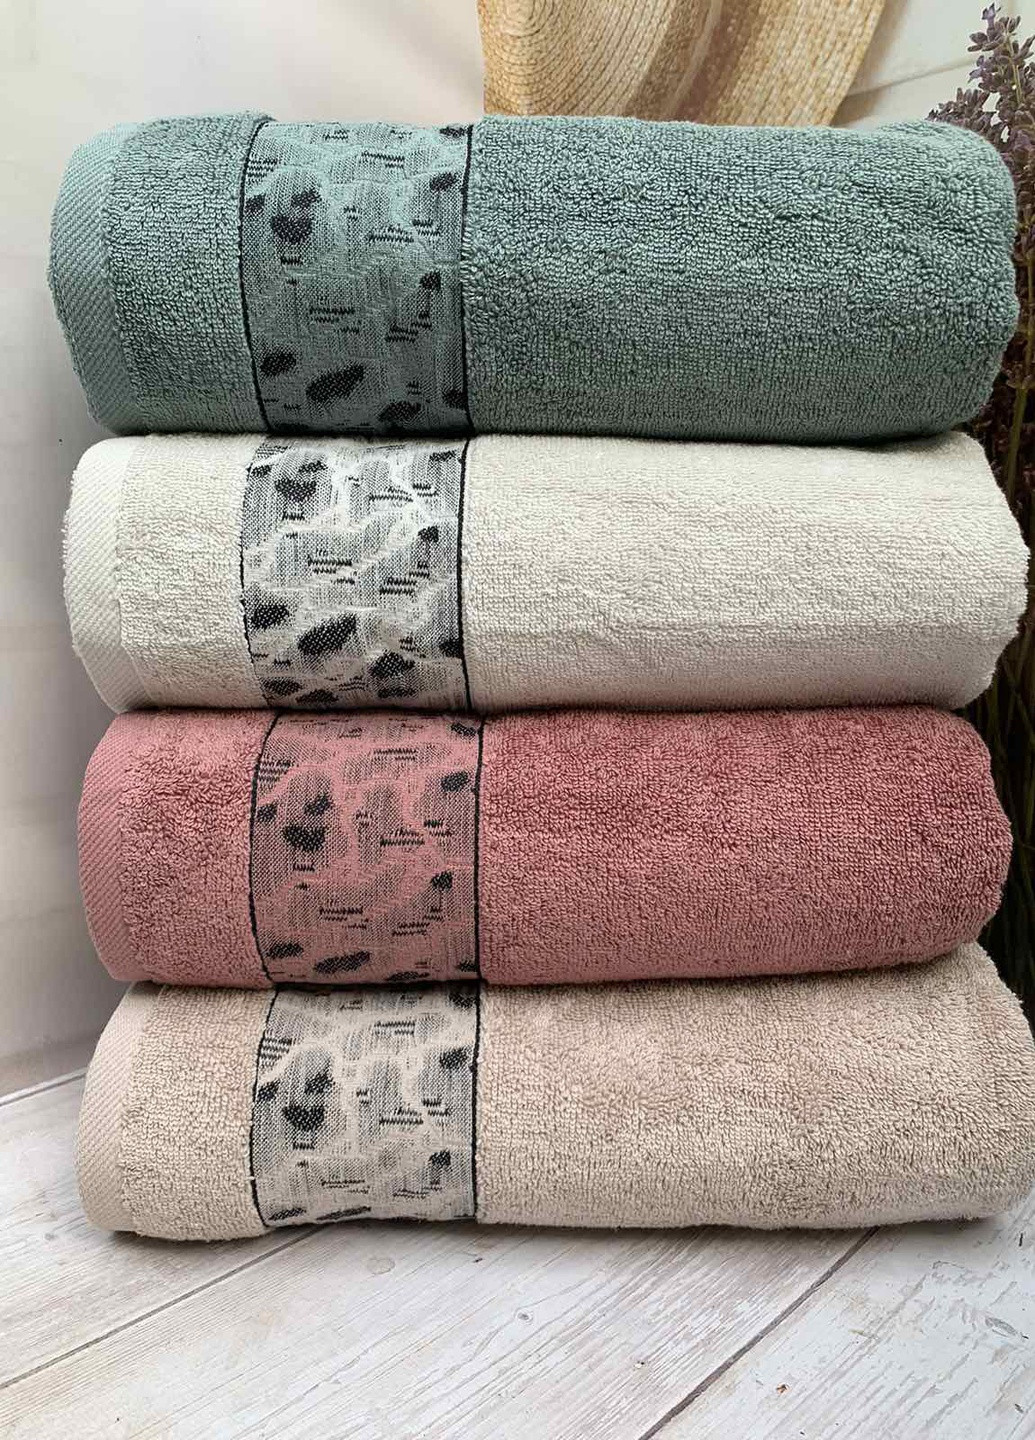 Sikel набор жаккардовых полотенцев для ванной penye frigya 50х90см (4 штуки) орнамент комбинированный производство - Турция